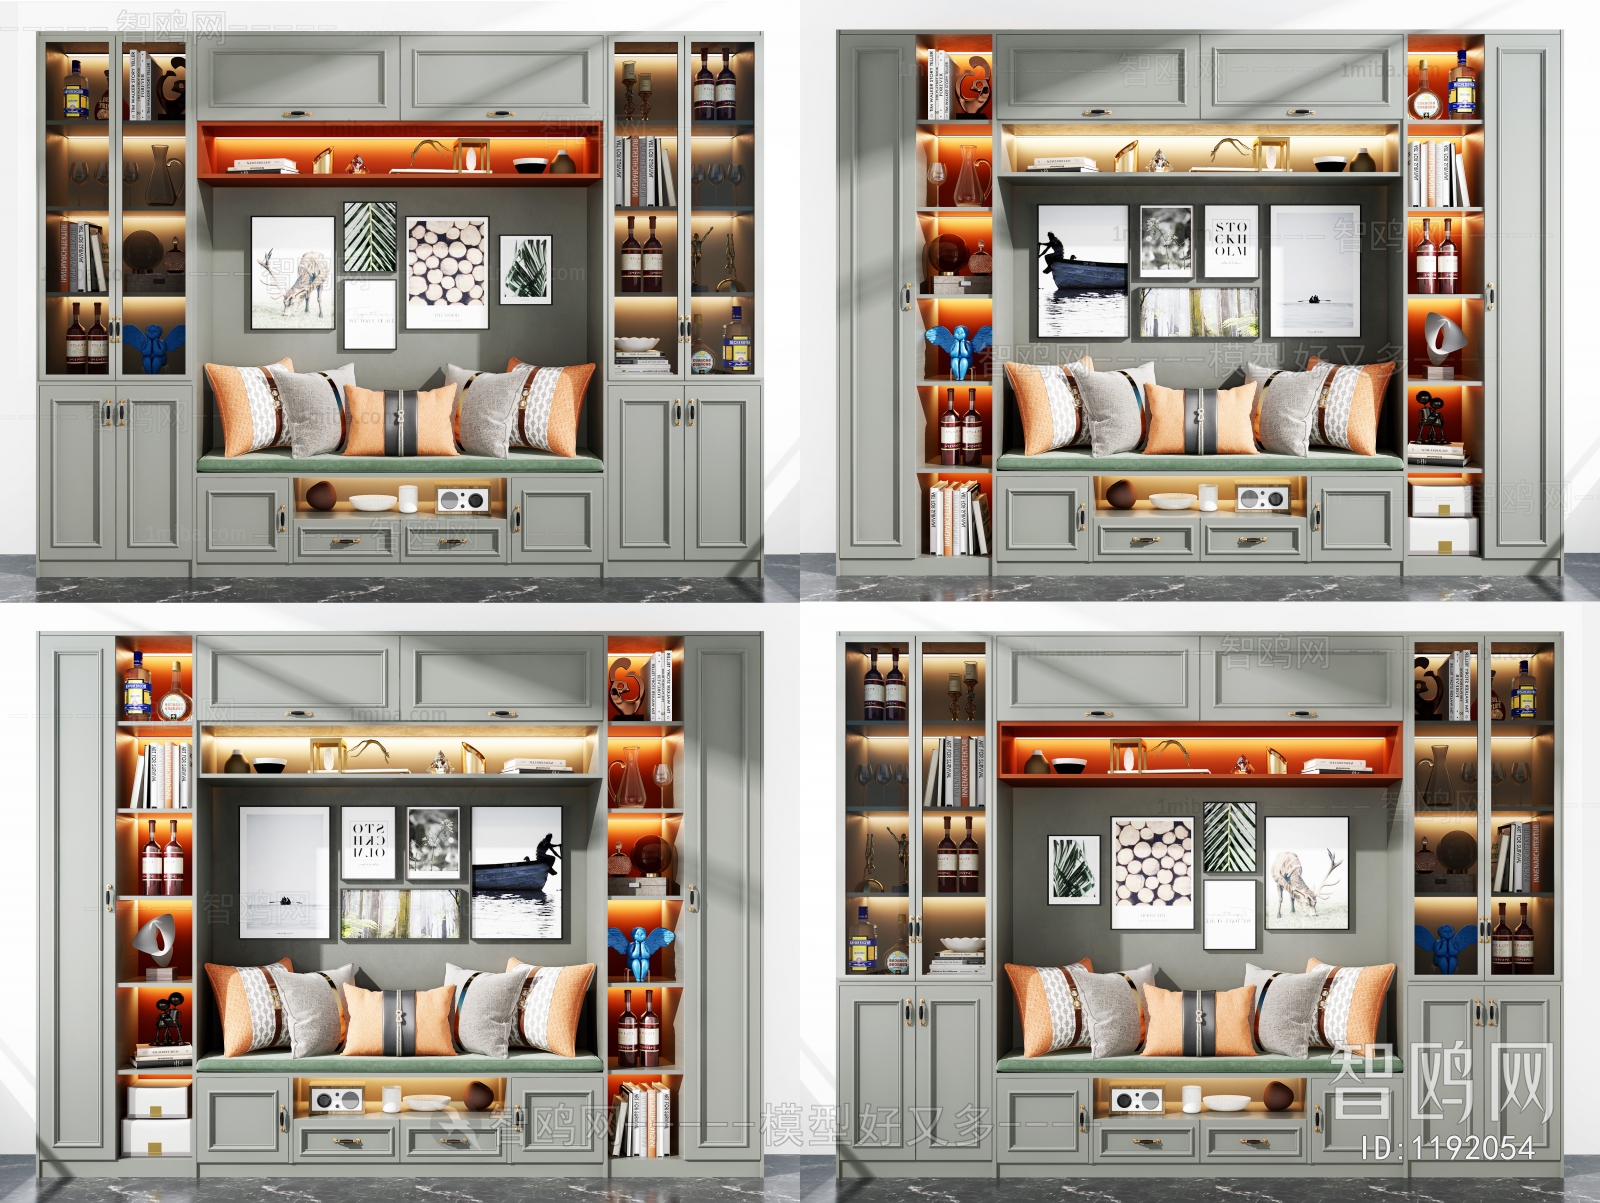 American Style Decorative Cabinet